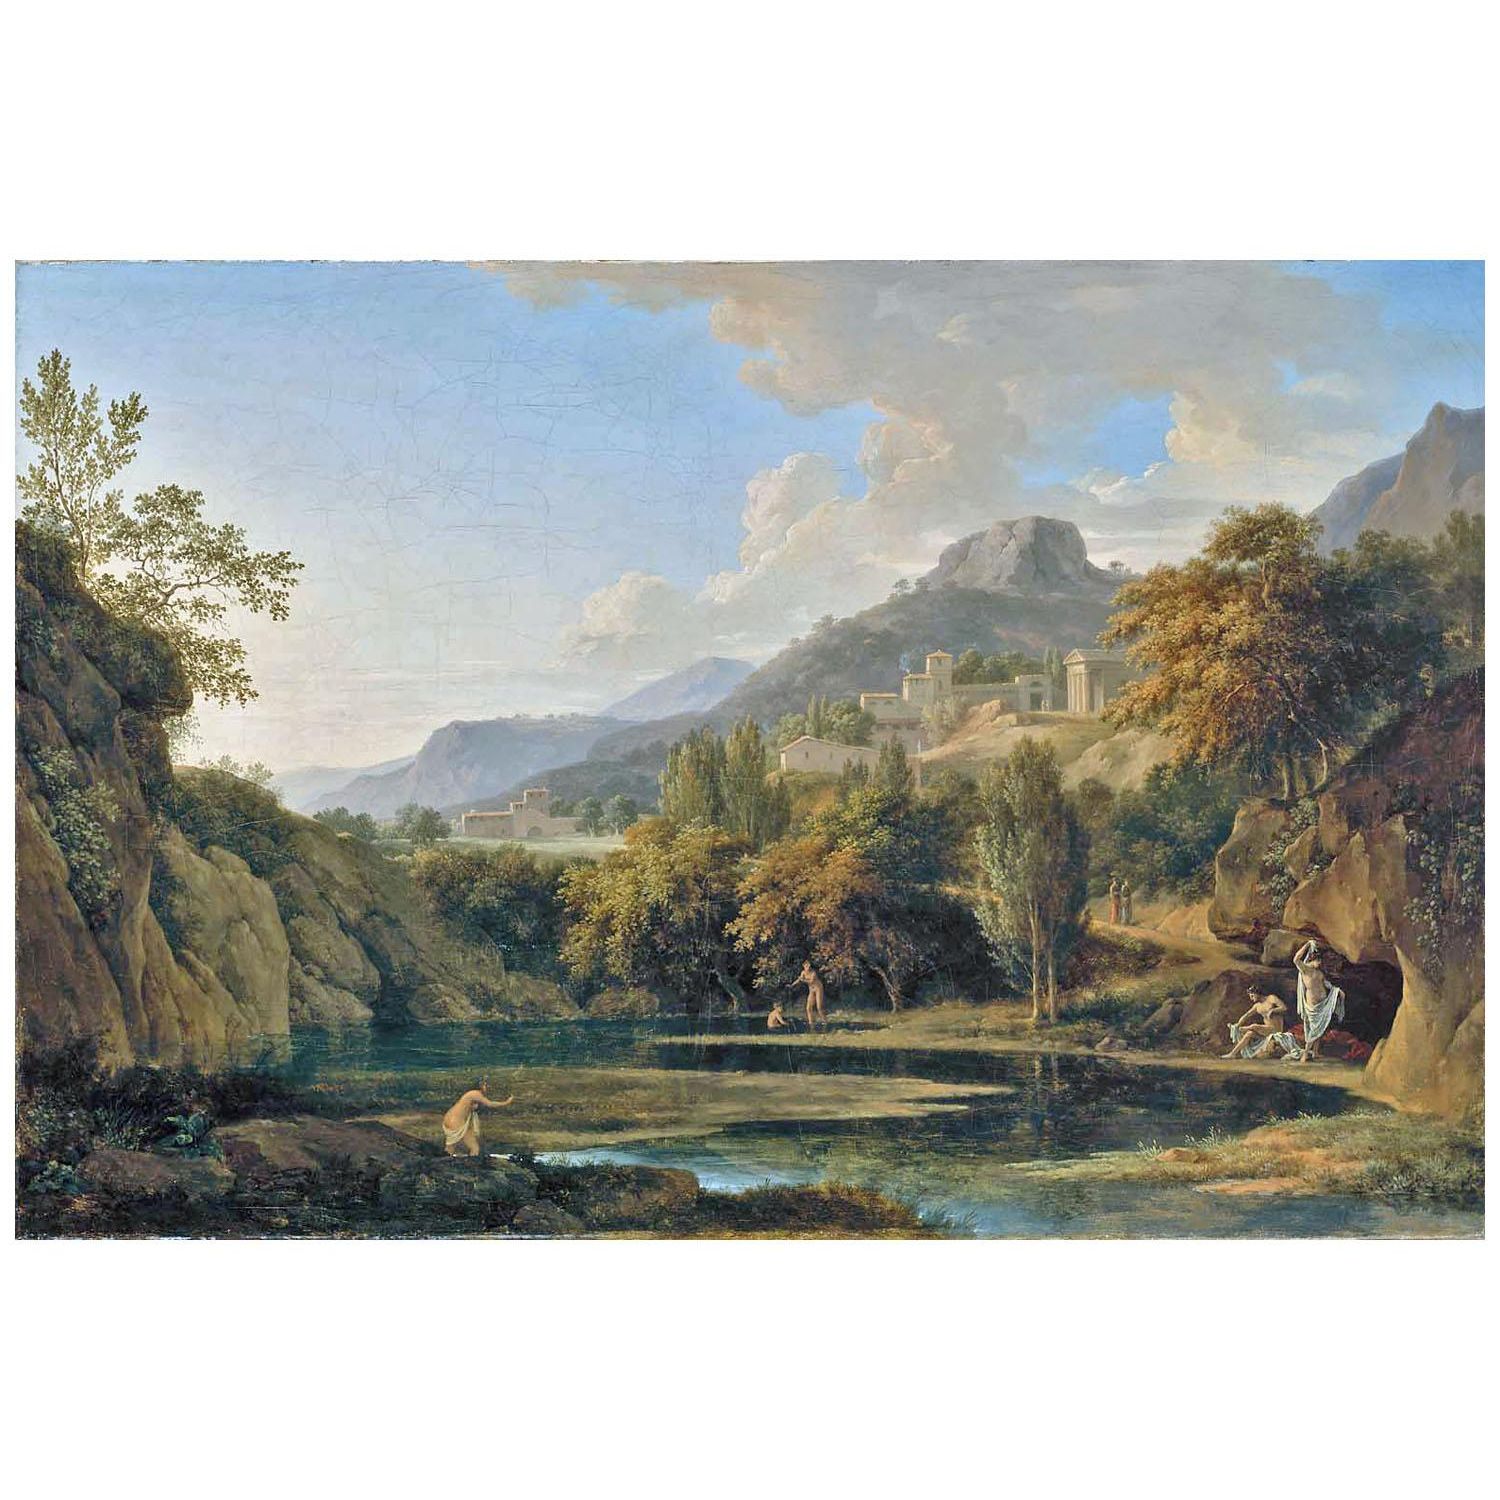 Pierre-Henri de Valenciennes. Paysage italien. 1780. Boston Museum of Fine Arts